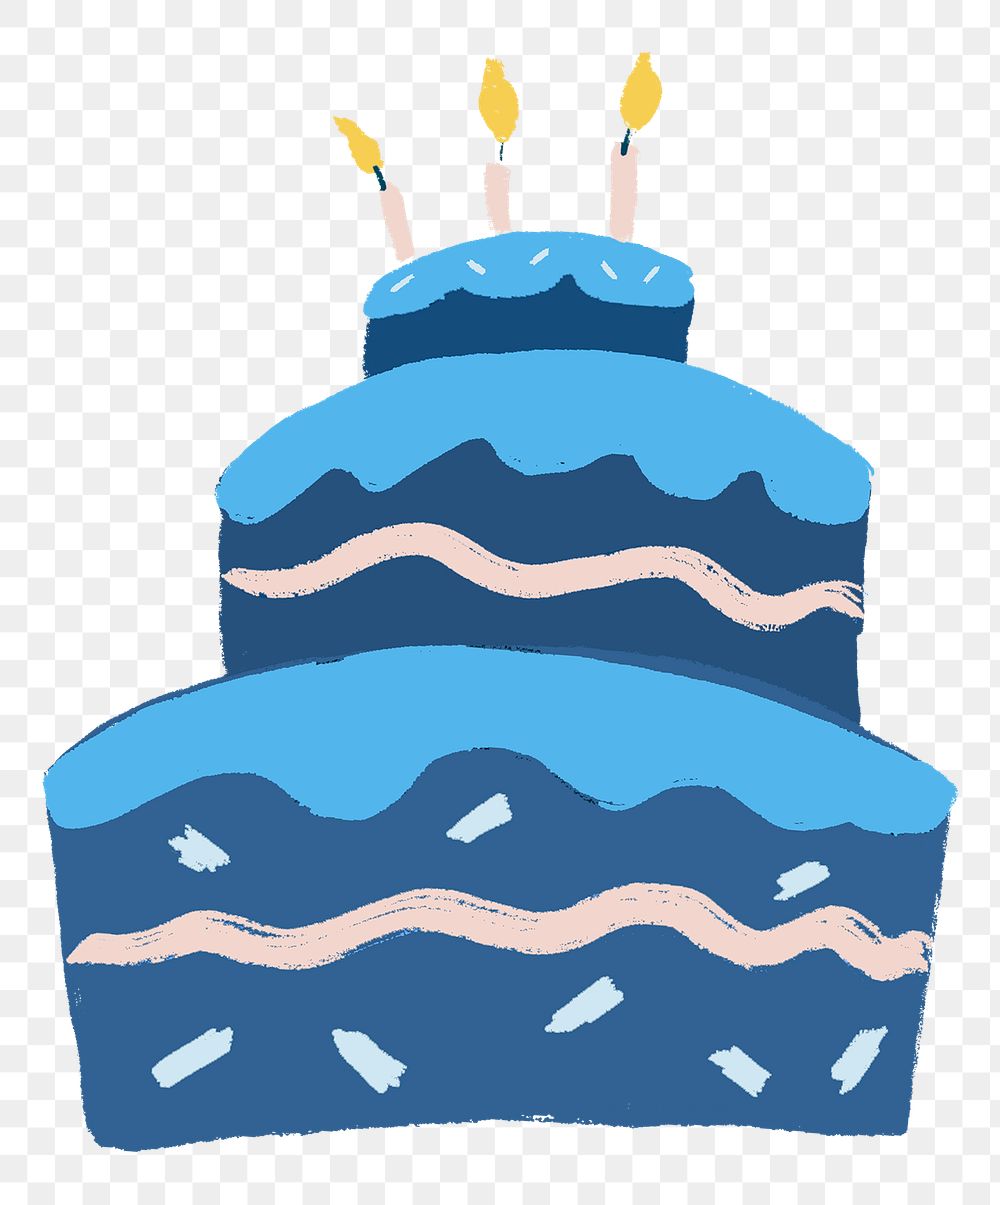 Birthday cake PNG sticker graphic